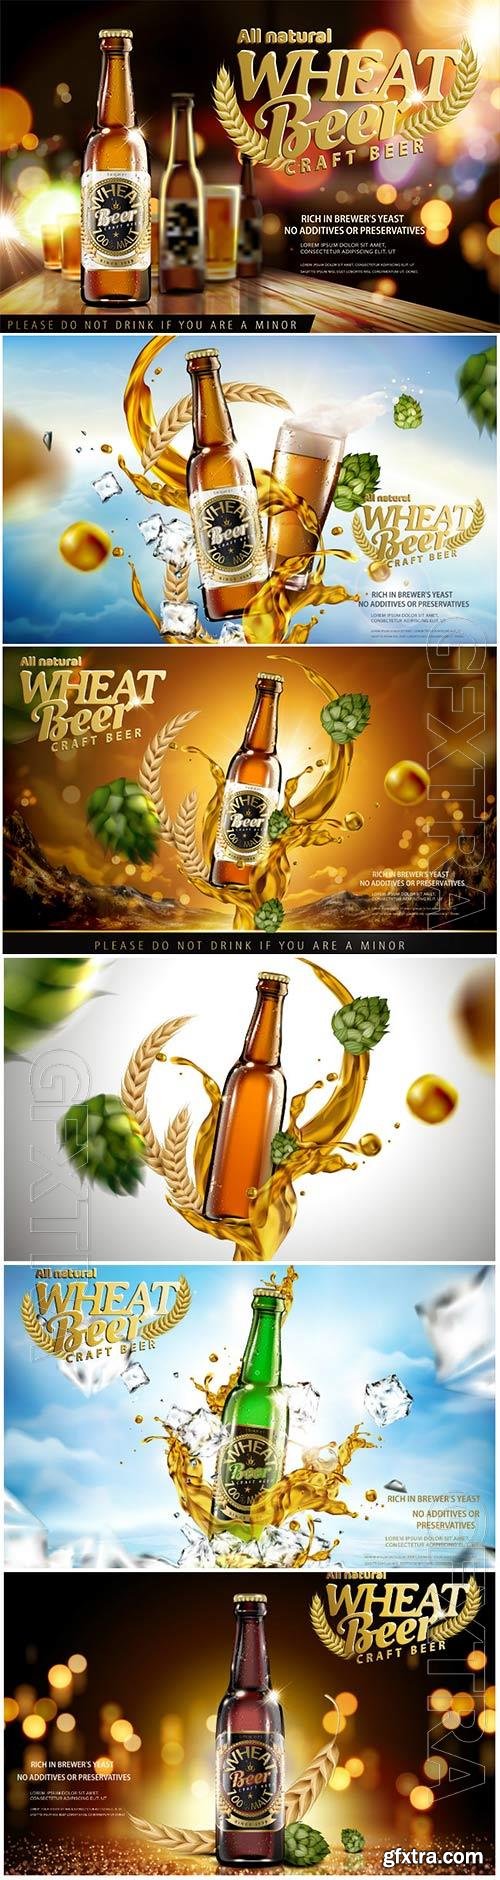 Beer advertising posters in vector